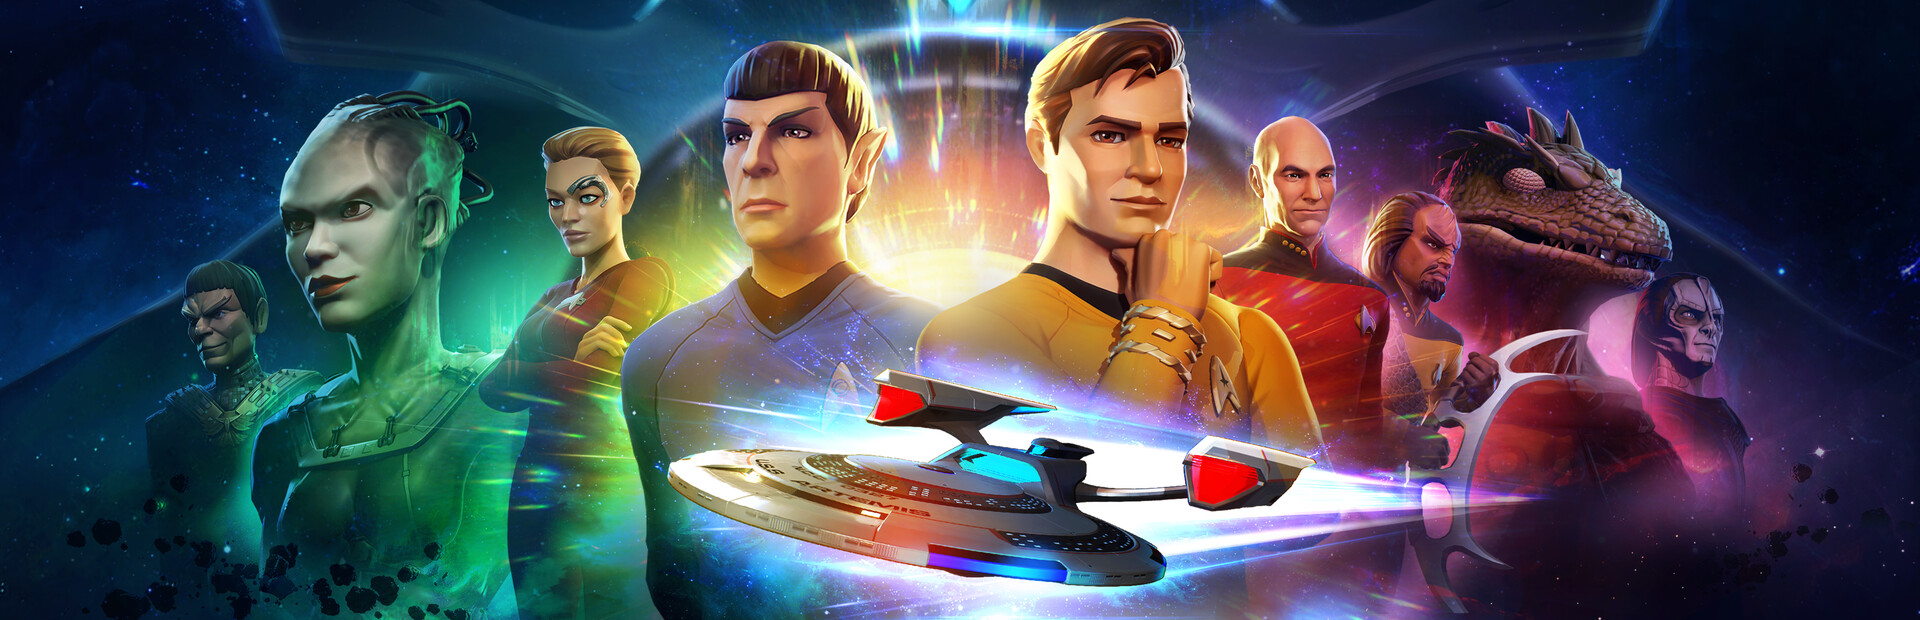 Star Trek Legends cover image